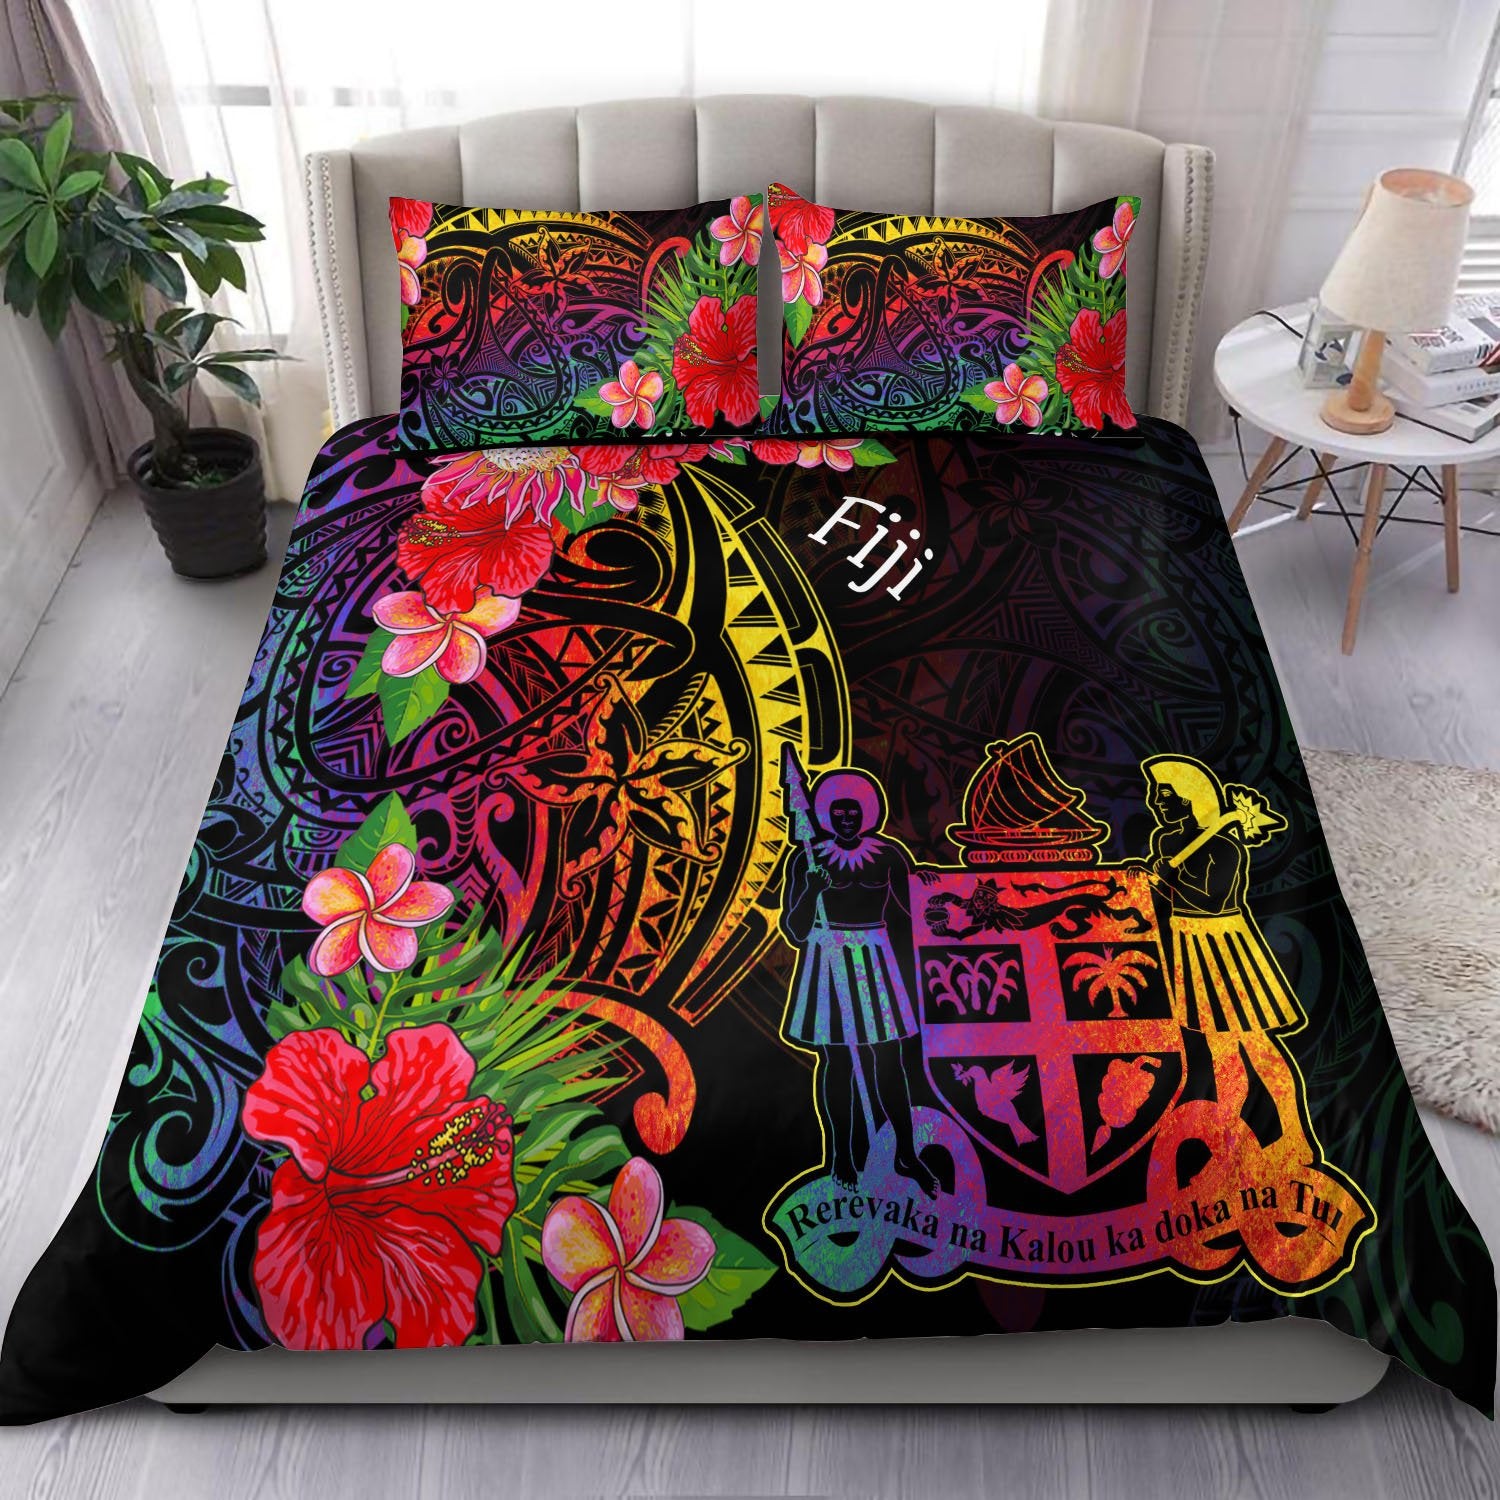 Fiji Bedding Set - Tropical Hippie Style Black - Polynesian Pride